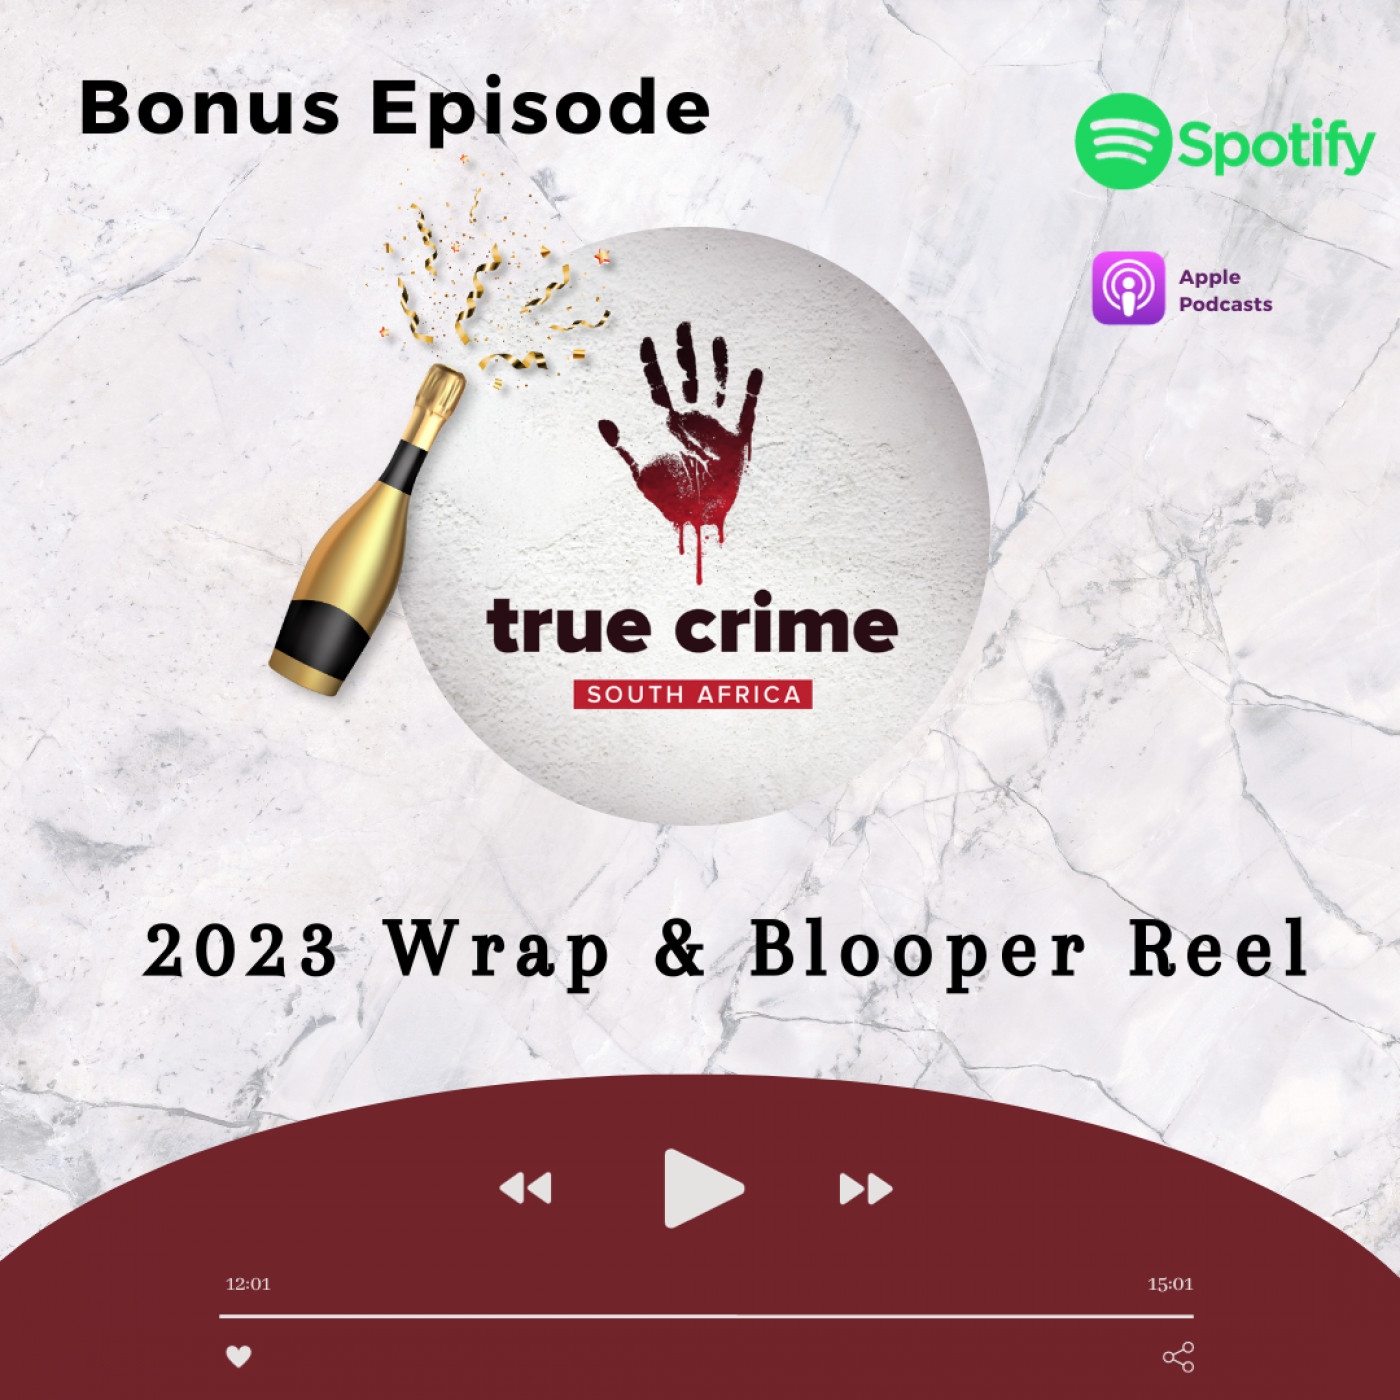 Bonus Episode: 2023 Wrap & Blooper Reel